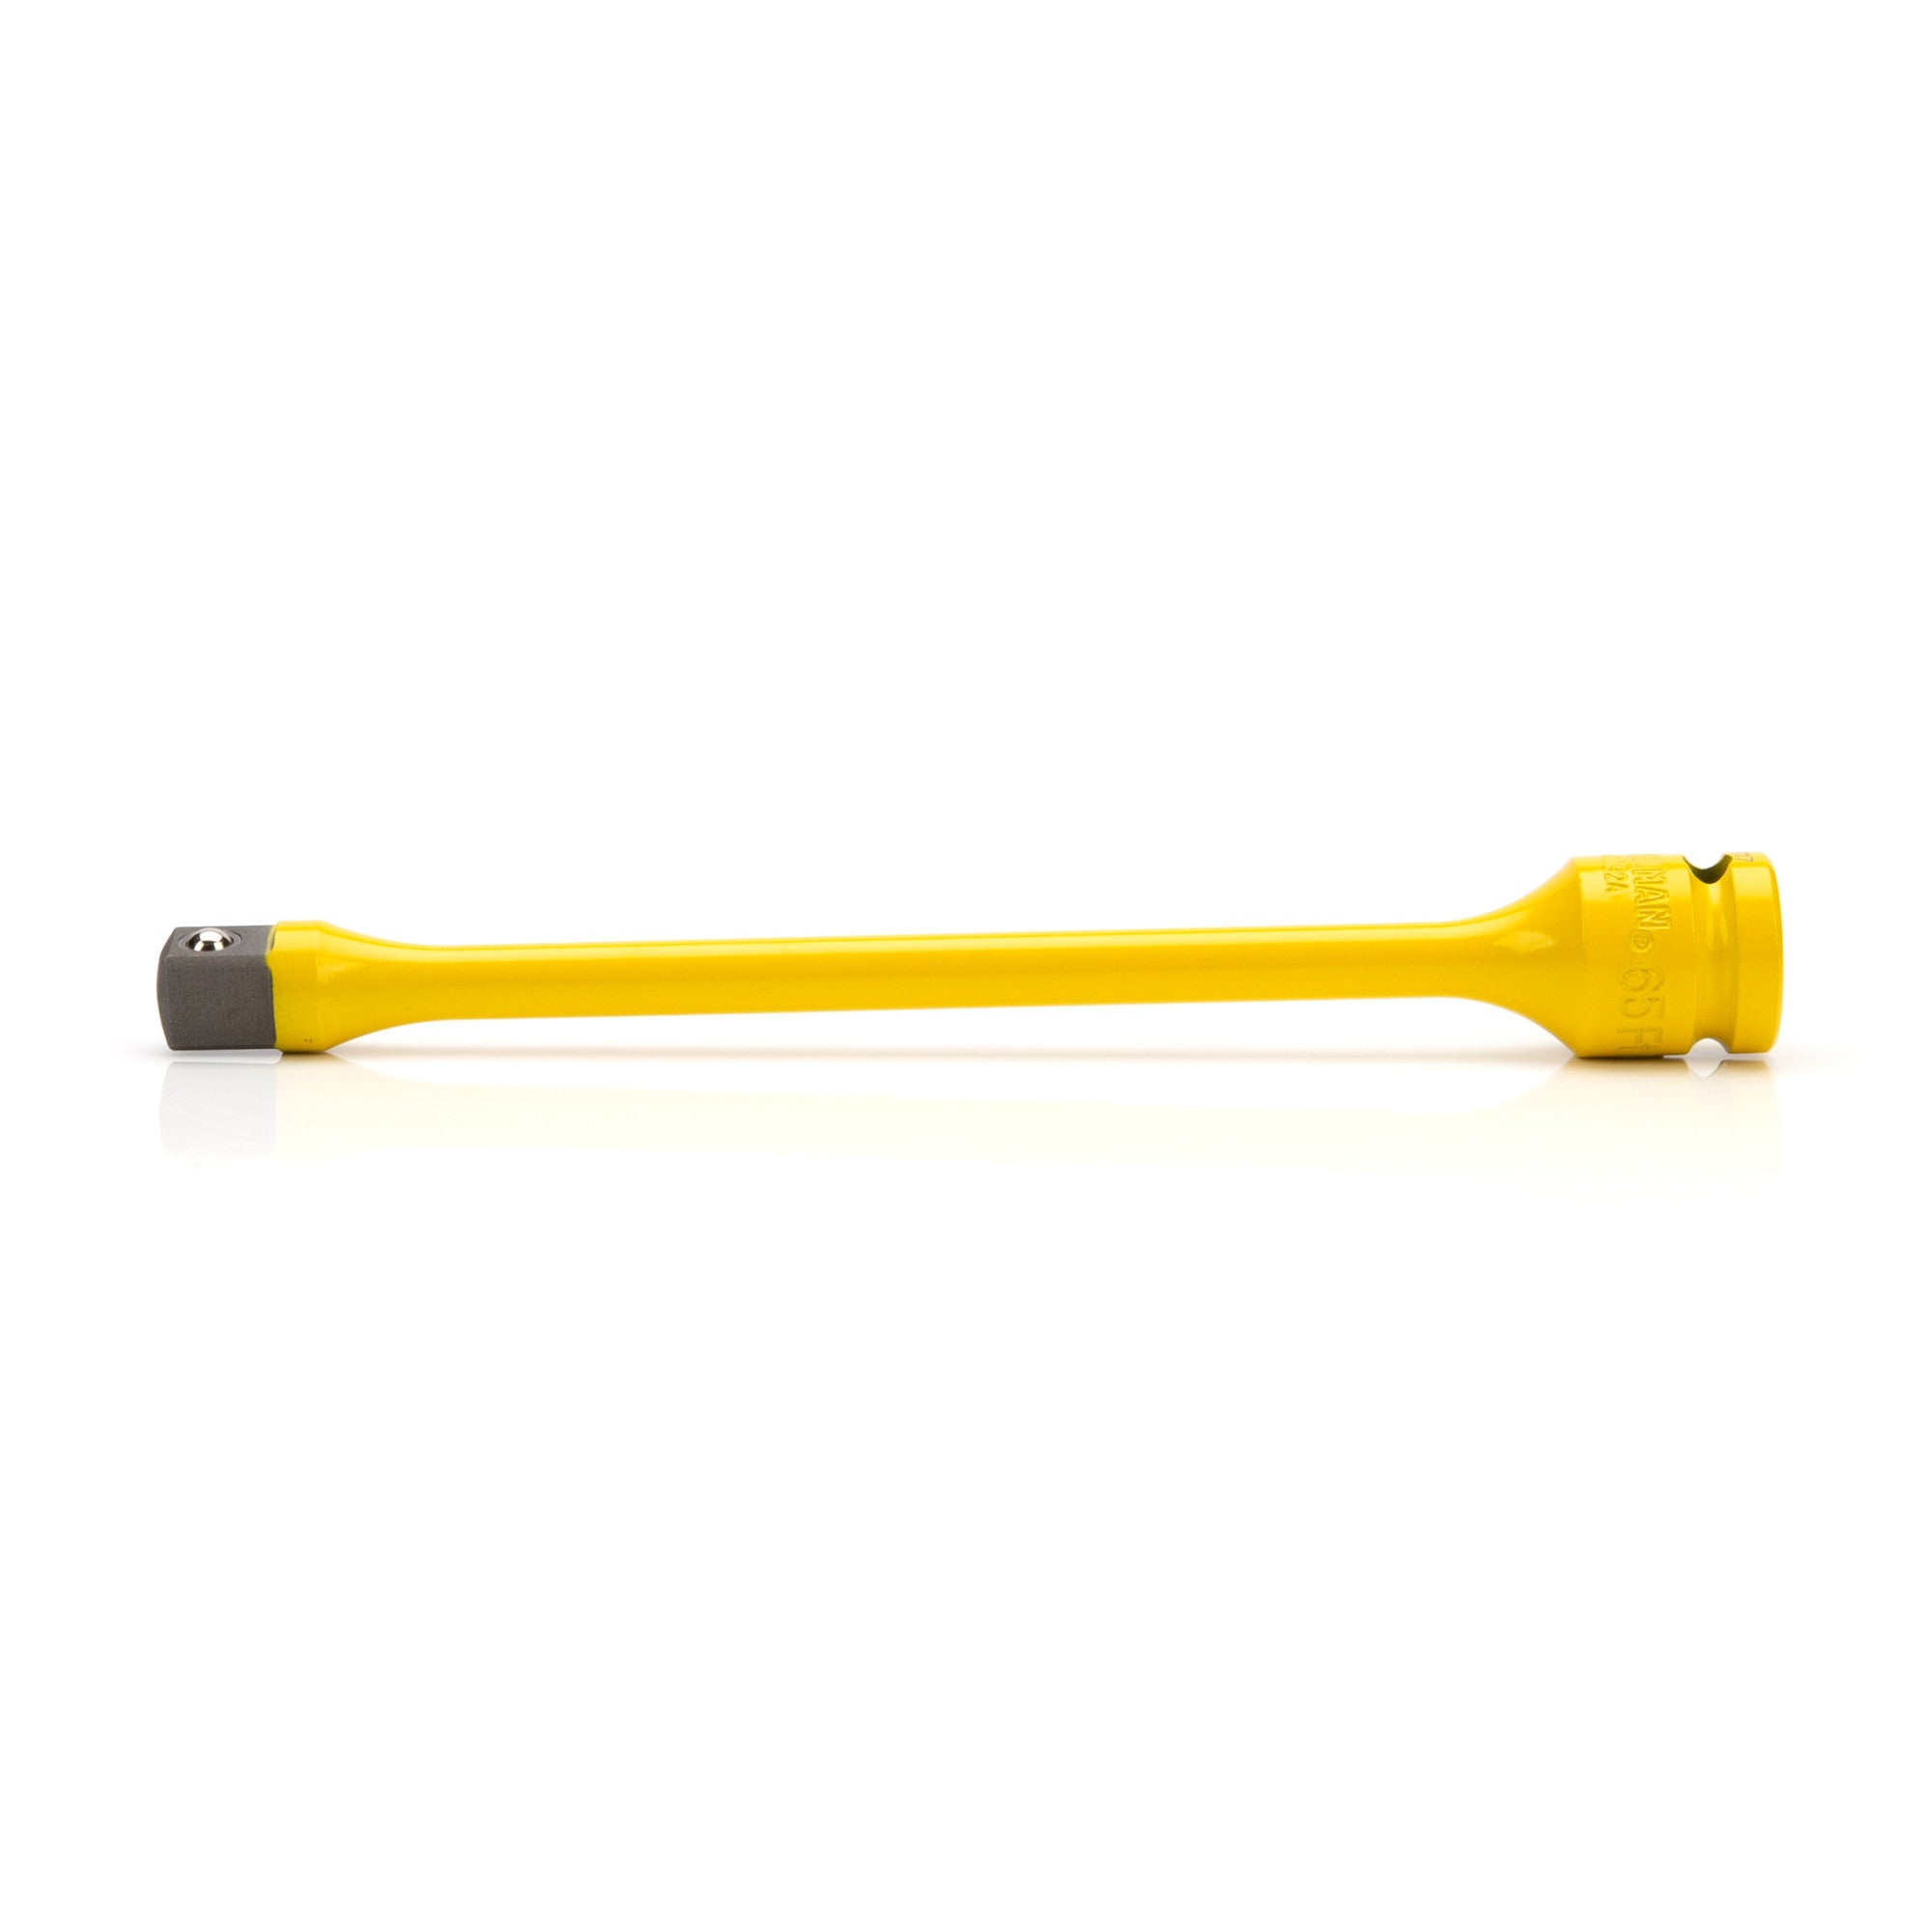 Steelman 3/4-Inch Drive 475 Ft-Lb Torque Extension- Yellow